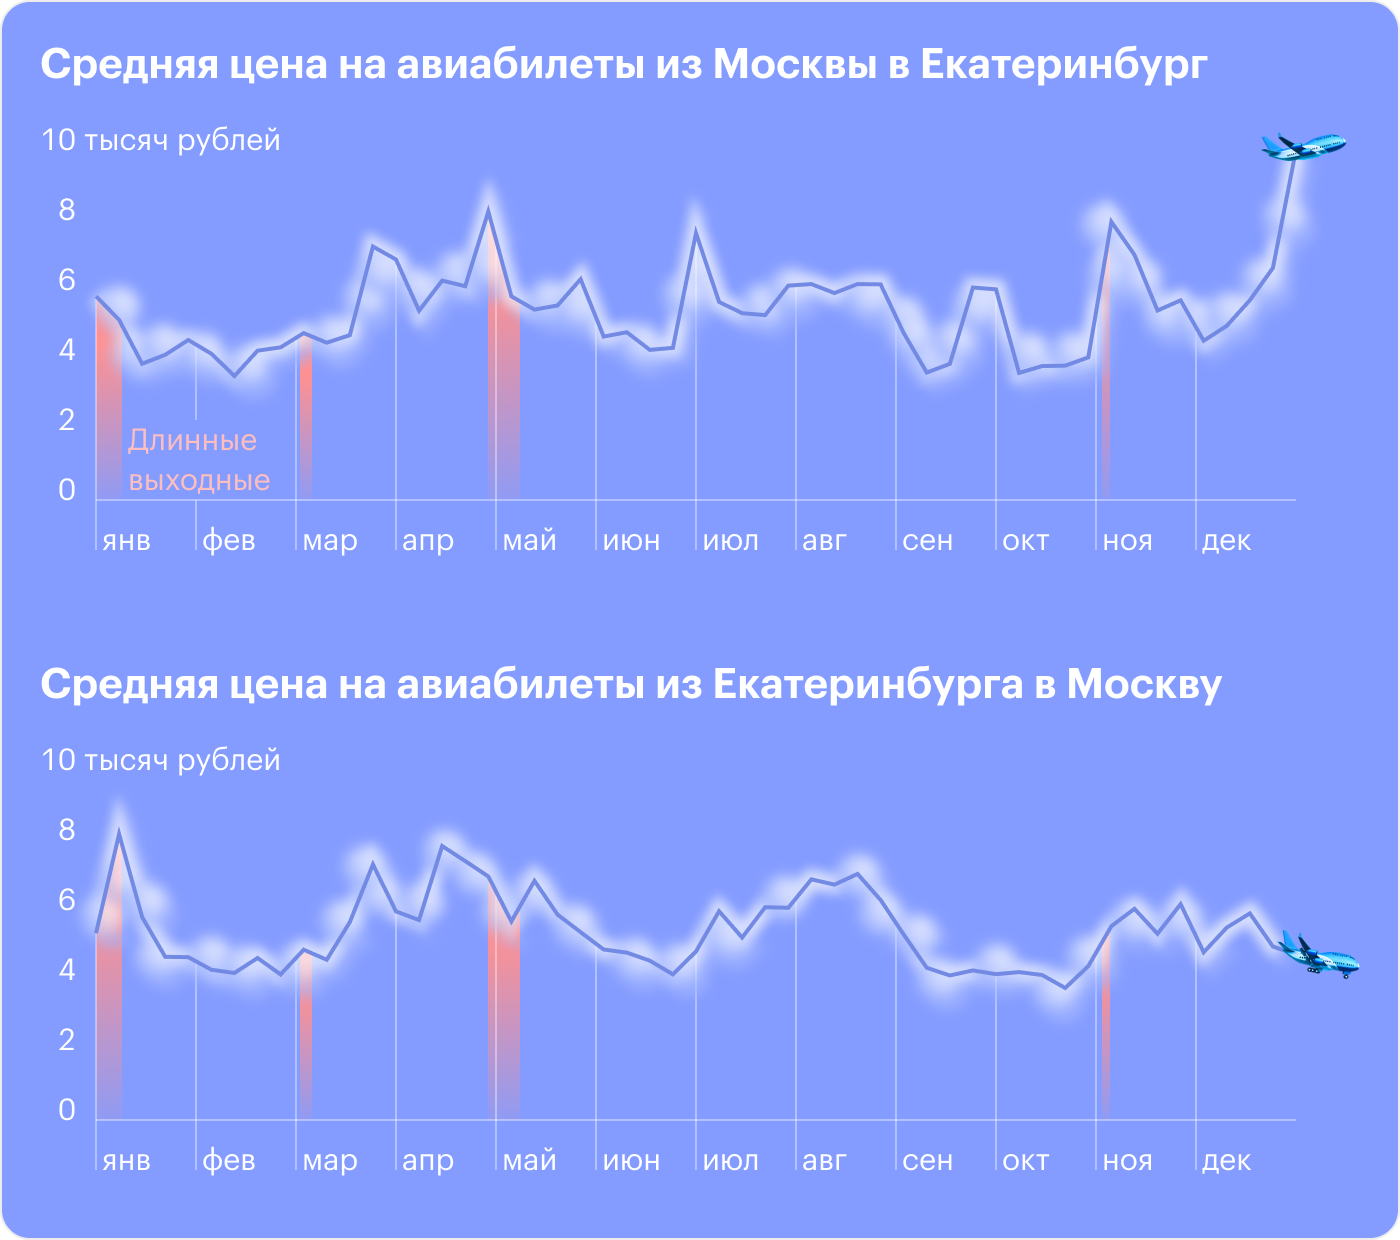 Динамика цен на авиабилеты по маршруту Москва — Екатеринбург и обратно. Источник: Tinkoff Data, расчеты Т⁠—⁠Ж